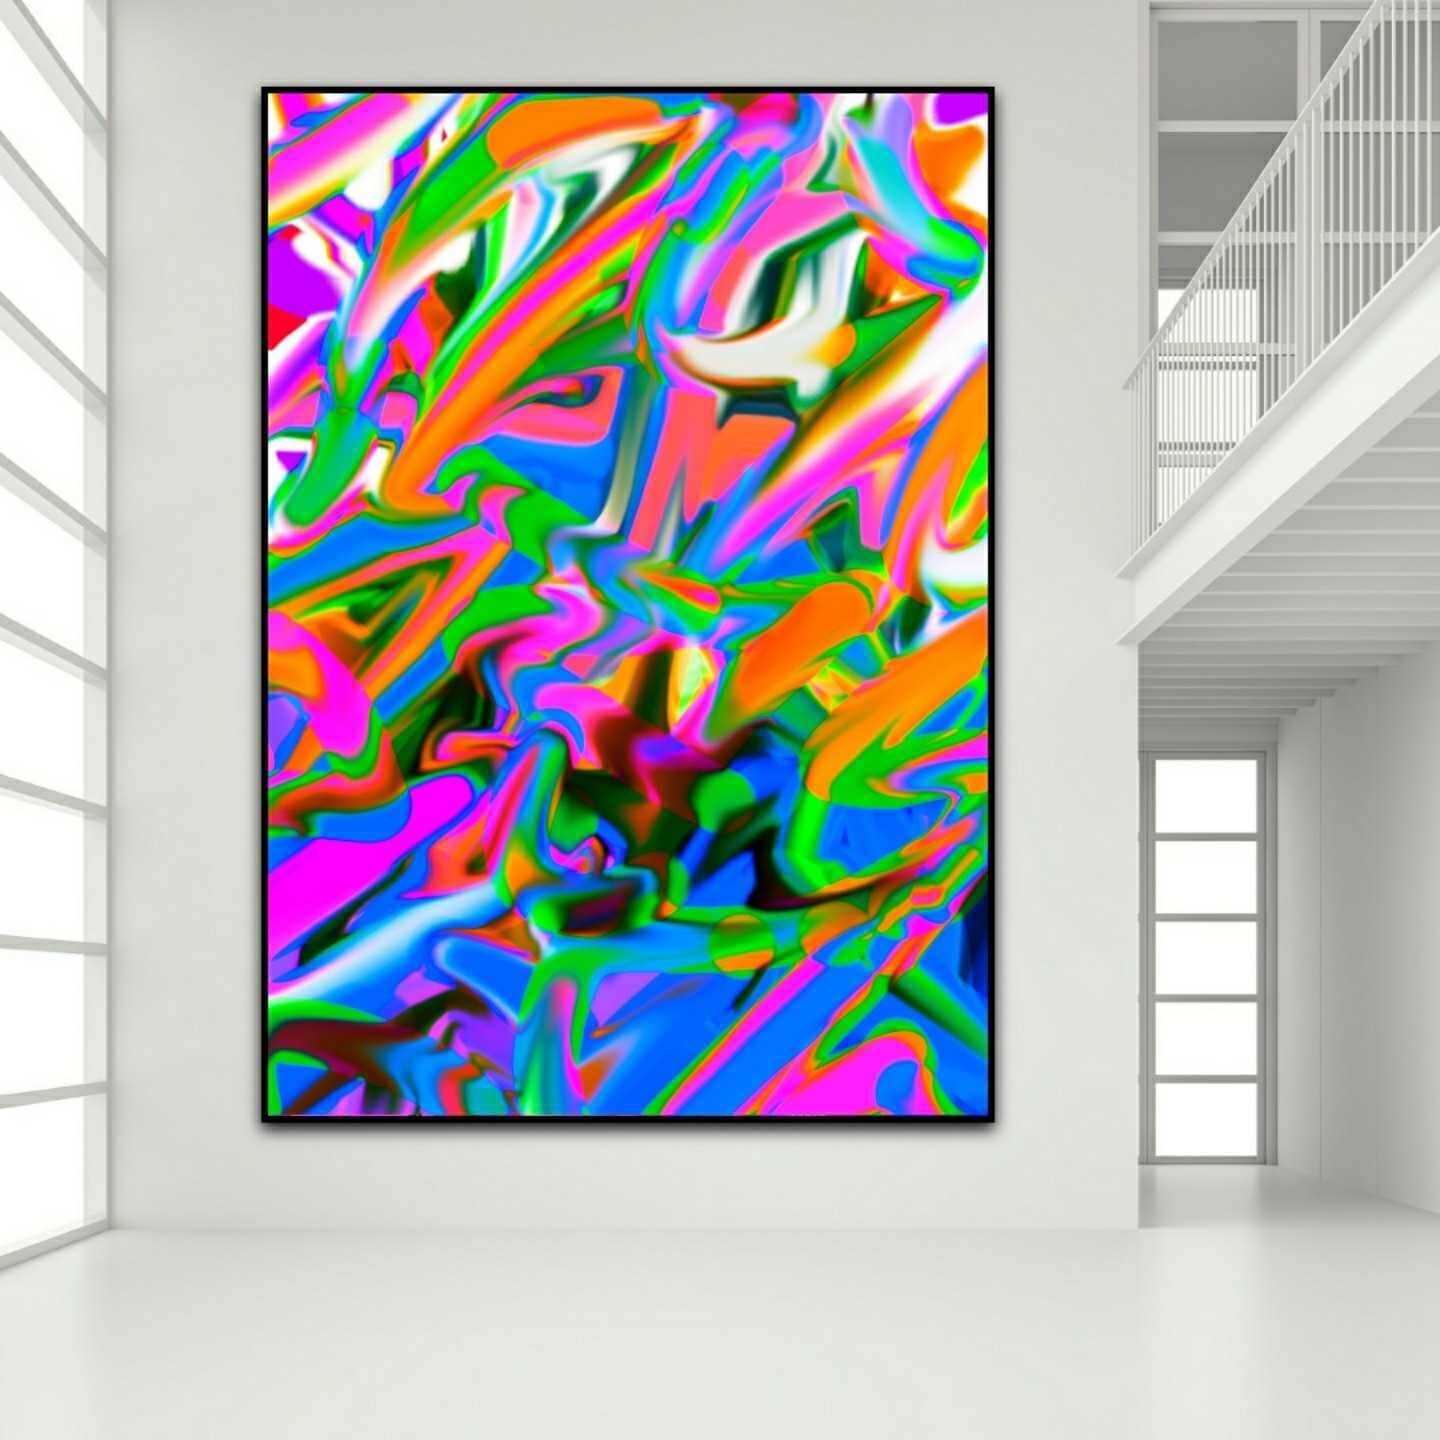 Neon Jungle XLIII
.
.
.
.
..

.

.

.

.

.

.
.

.
#digitalart
#abstractart #contemporaryartist #colourcrush #digitalart #art #drawing #illustration #artist #artwork #moderngallery#digitalcontemporaryart #artcollectors  #artistsoninstagram to #sketc